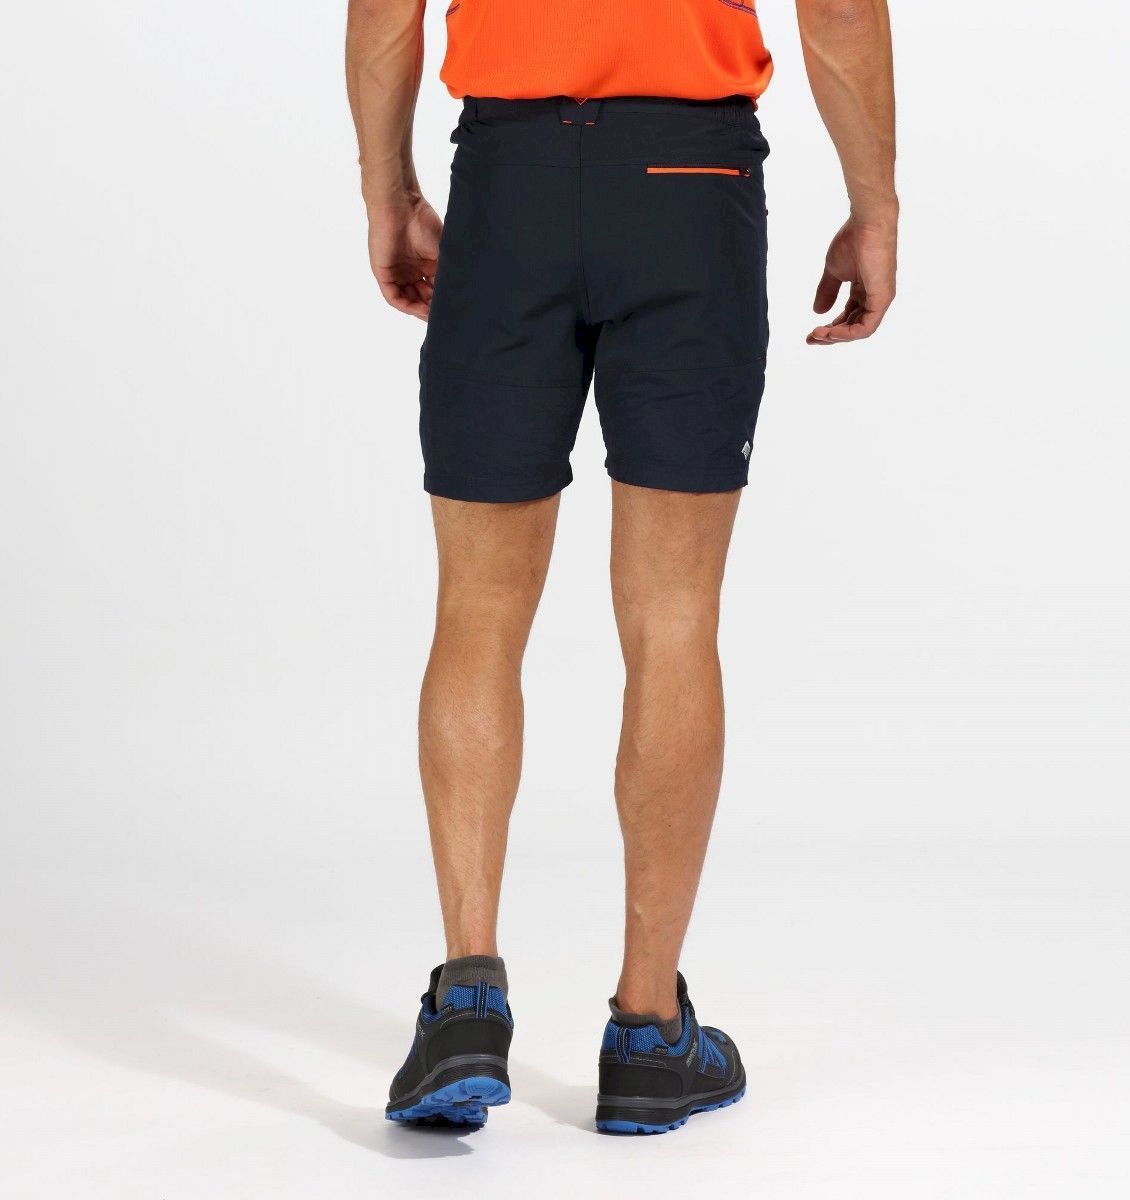   Regatta Sungari Shorts, : . RMJ207-081.  44